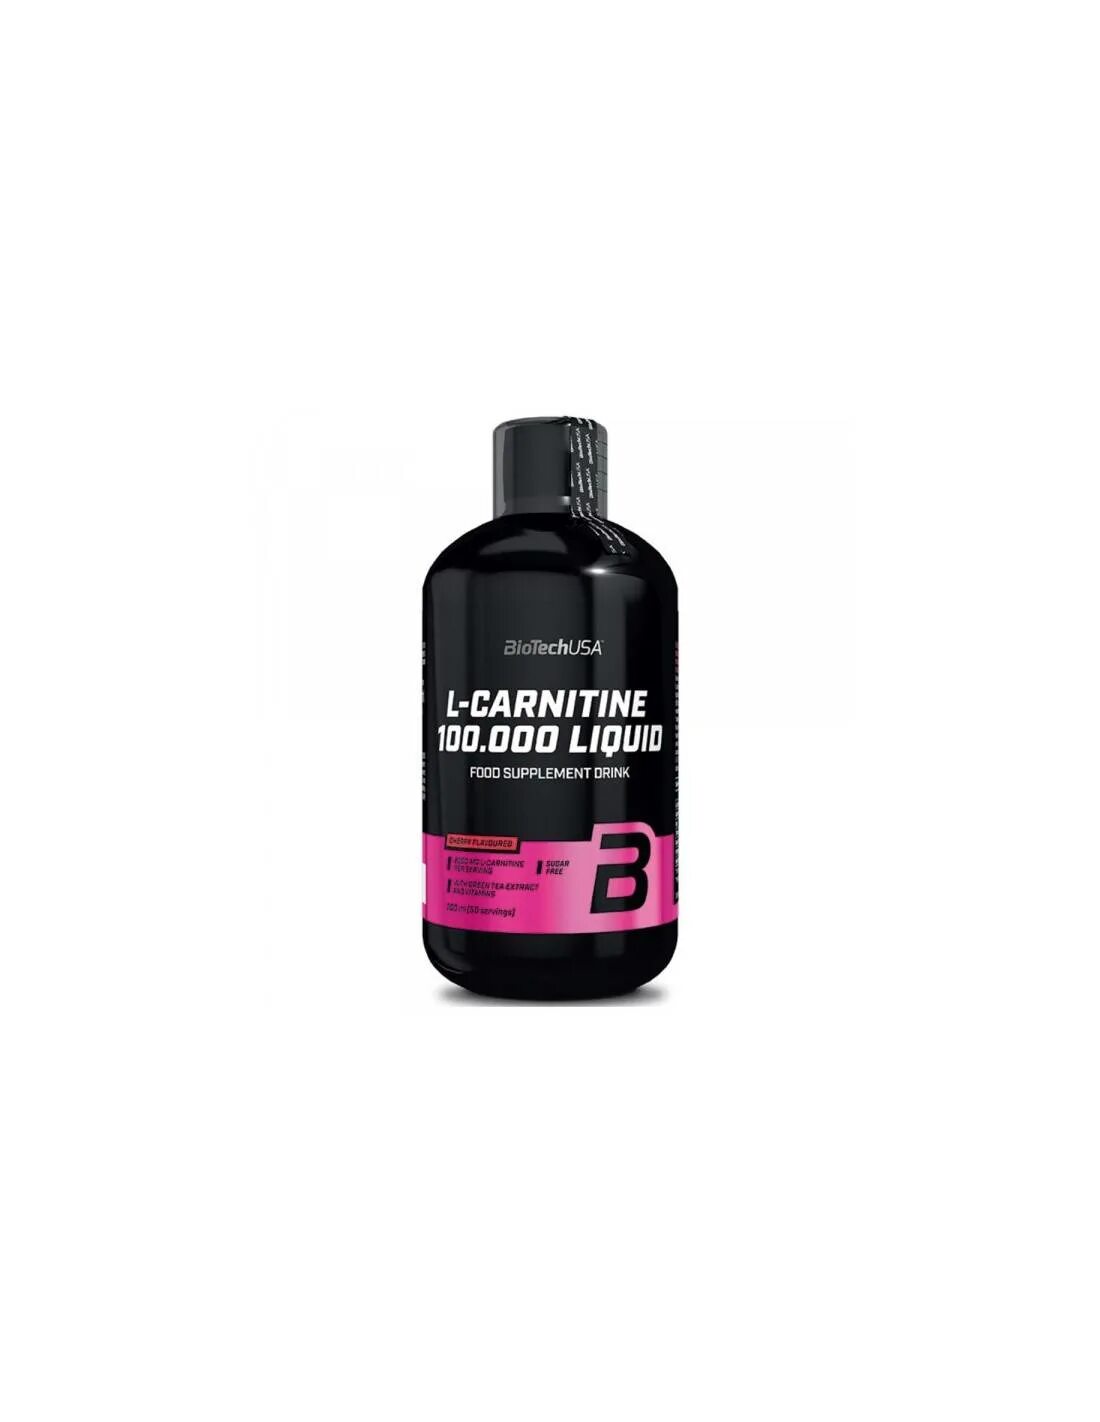 L-Carnitine+Chrome 500 мл. Biotech USA L-Carnitine 100000. Biotech l-Carnitine 100000 Liquid. Л карнитин жидкий Biotech. Как пить жидкий карнитин